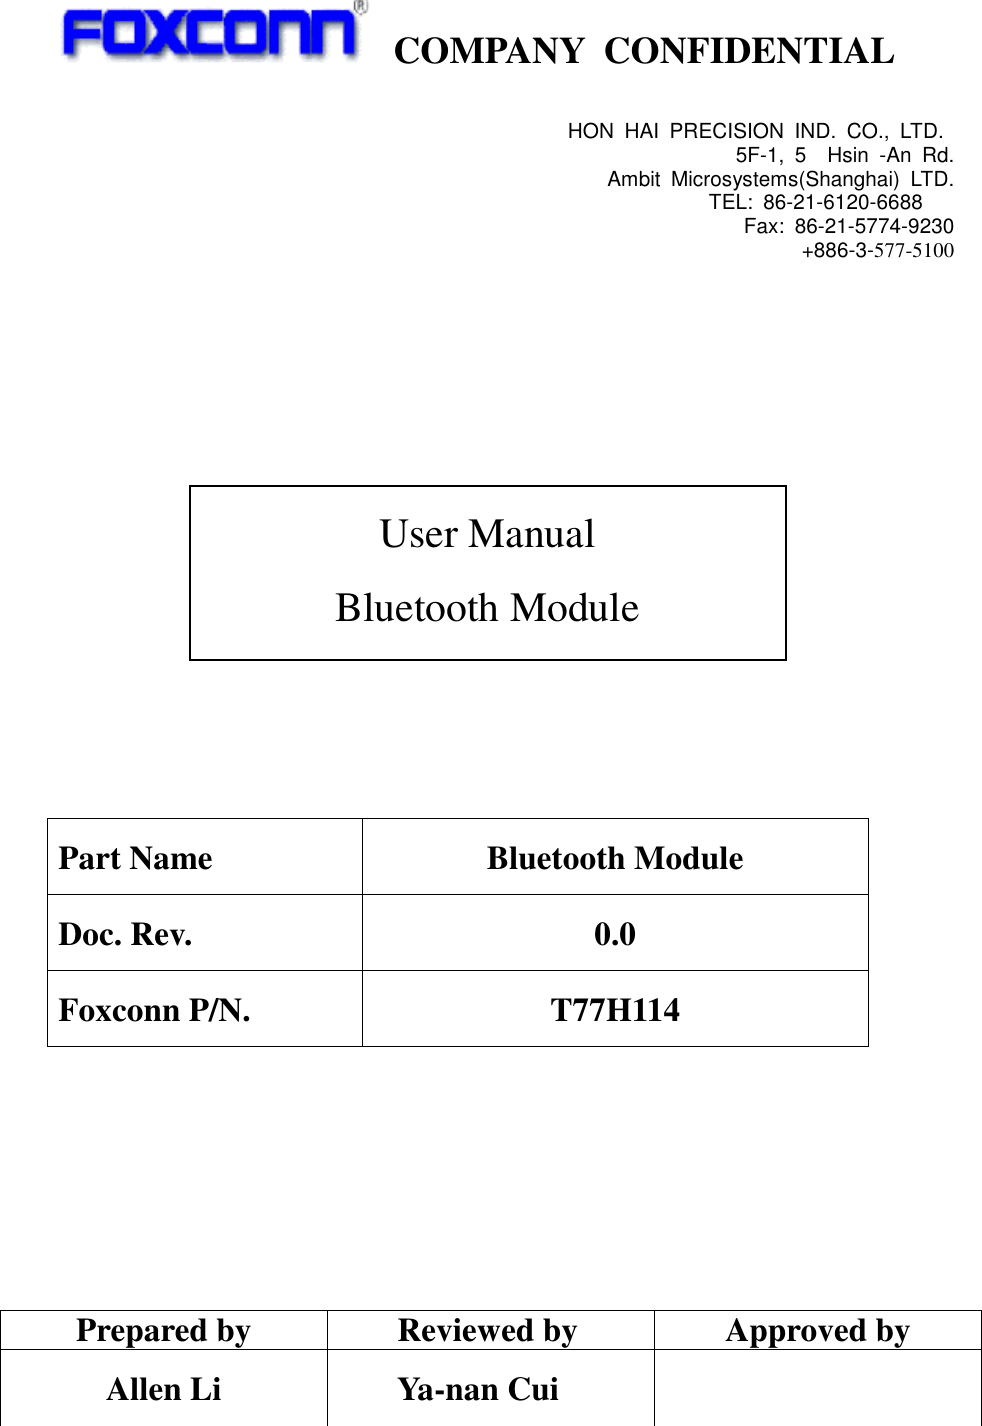    COMPANY  CONFIDENTIAL                                Part Name  Bluetooth Module Doc. Rev.  0.0 Foxconn P/N.  T77H114        Prepared by  Reviewed by  Approved by Allen Li          Ya-nan Cui   User Manual Bluetooth Module HON  HAI  PRECISION  IND.  CO.,  LTD.  5F-1,  5    Hsin  -An  Rd. Ambit  Microsystems(Shanghai)  LTD. TEL:  86-21-6120-6688      Fax:  86-21-5774-9230 +886-3-577-5100  